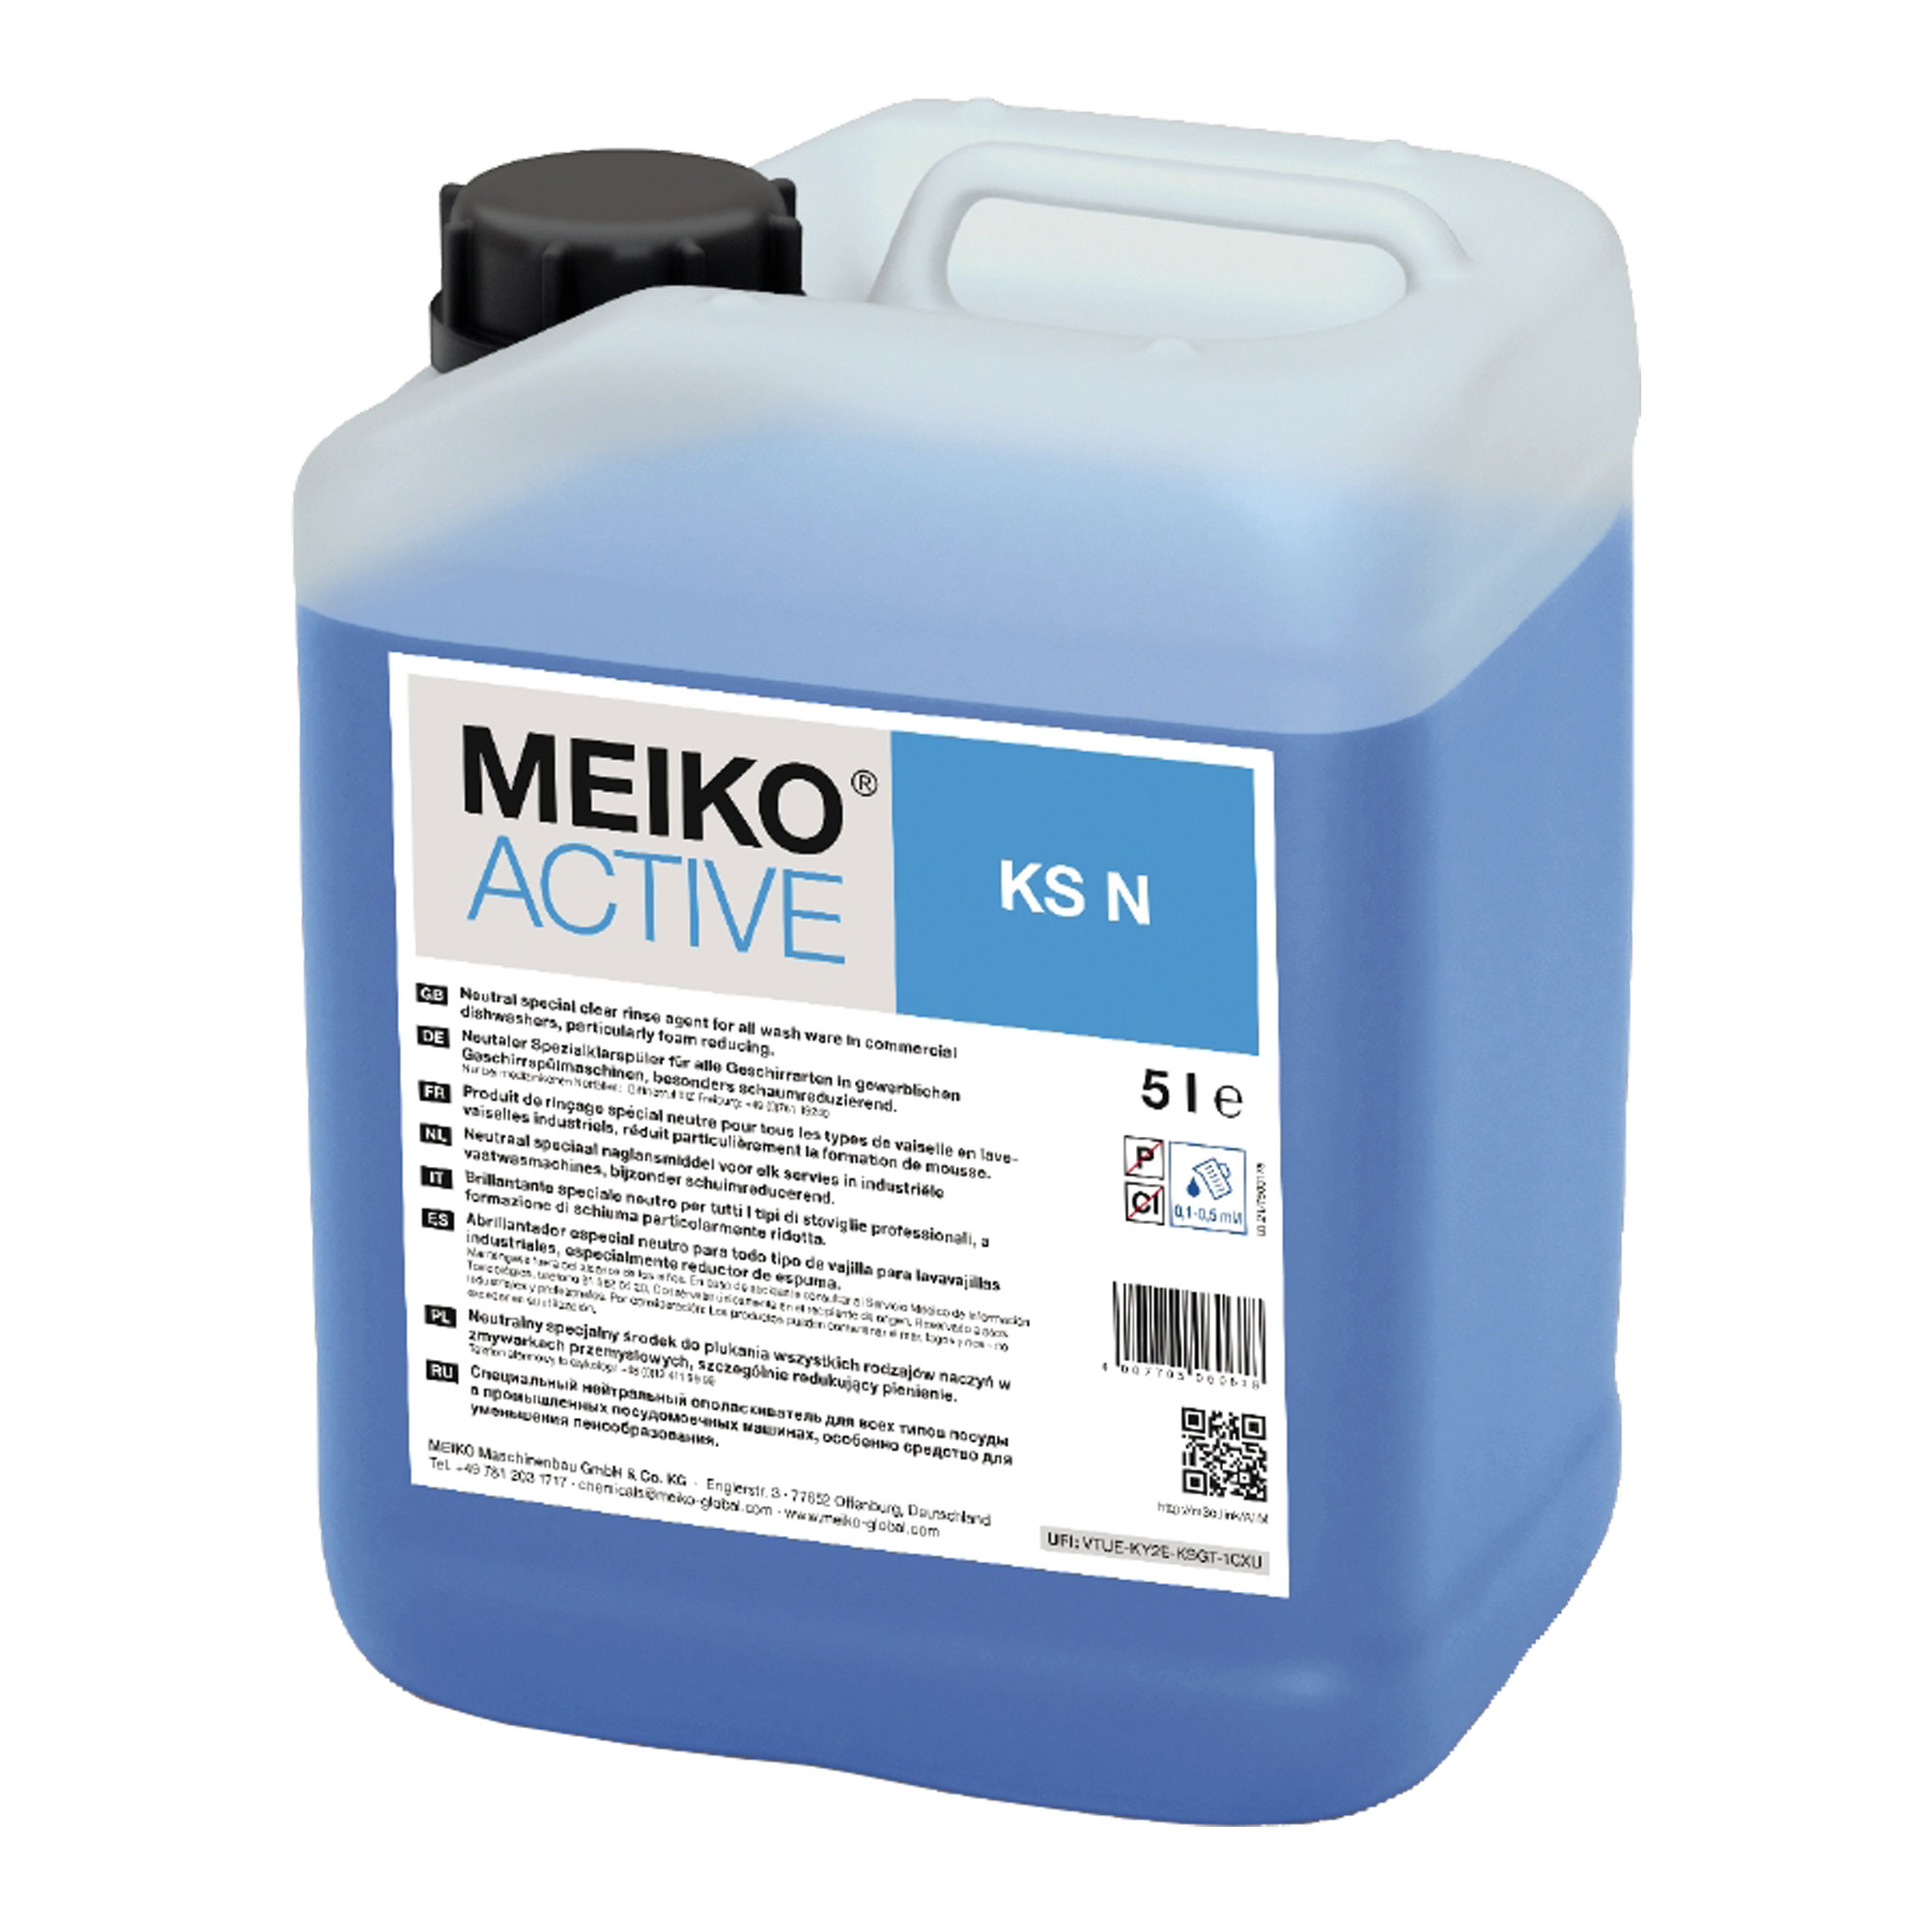 Meiko Active KS N neutraler Universal-Klarspüler